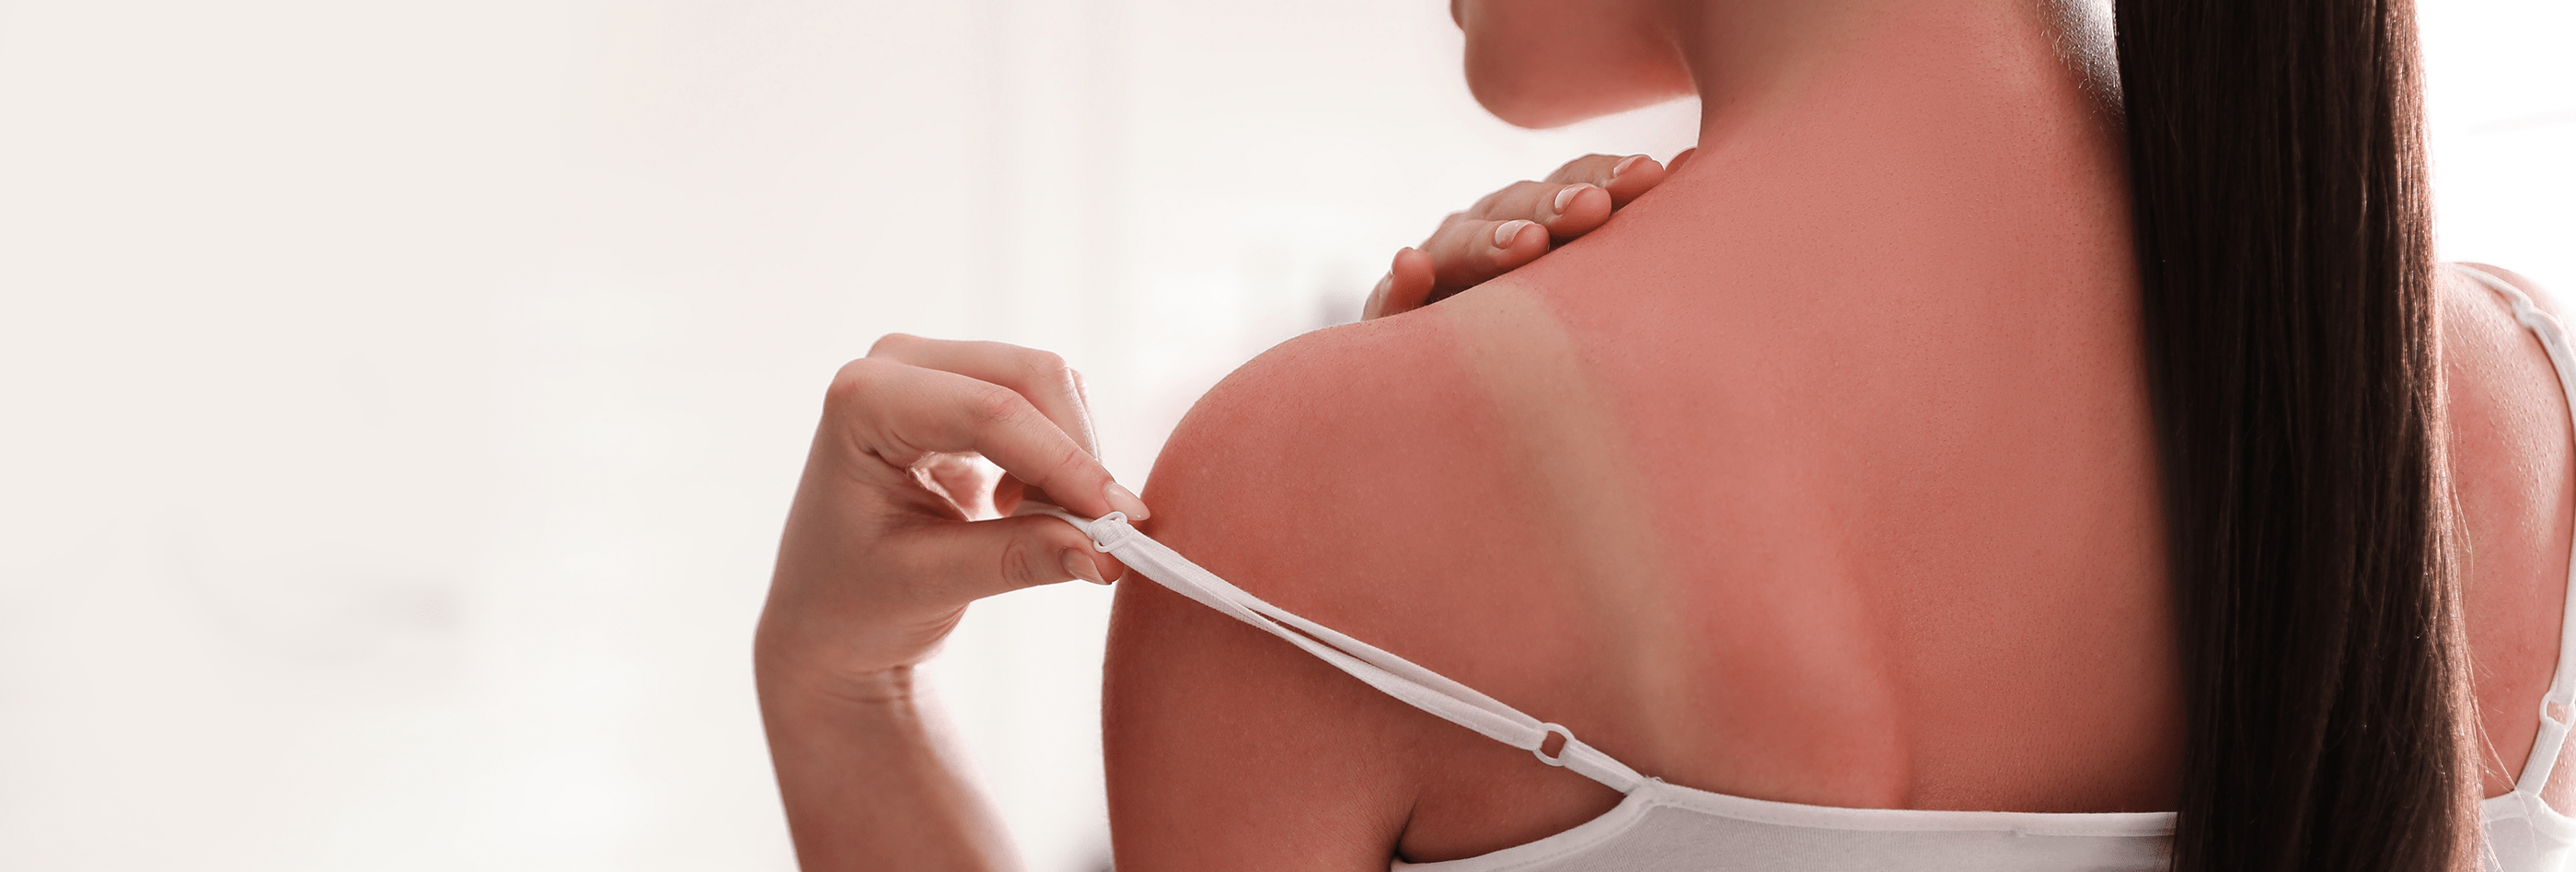 12 Best Home Remedies for Sunburn - How to Get Rid of Skin Burn